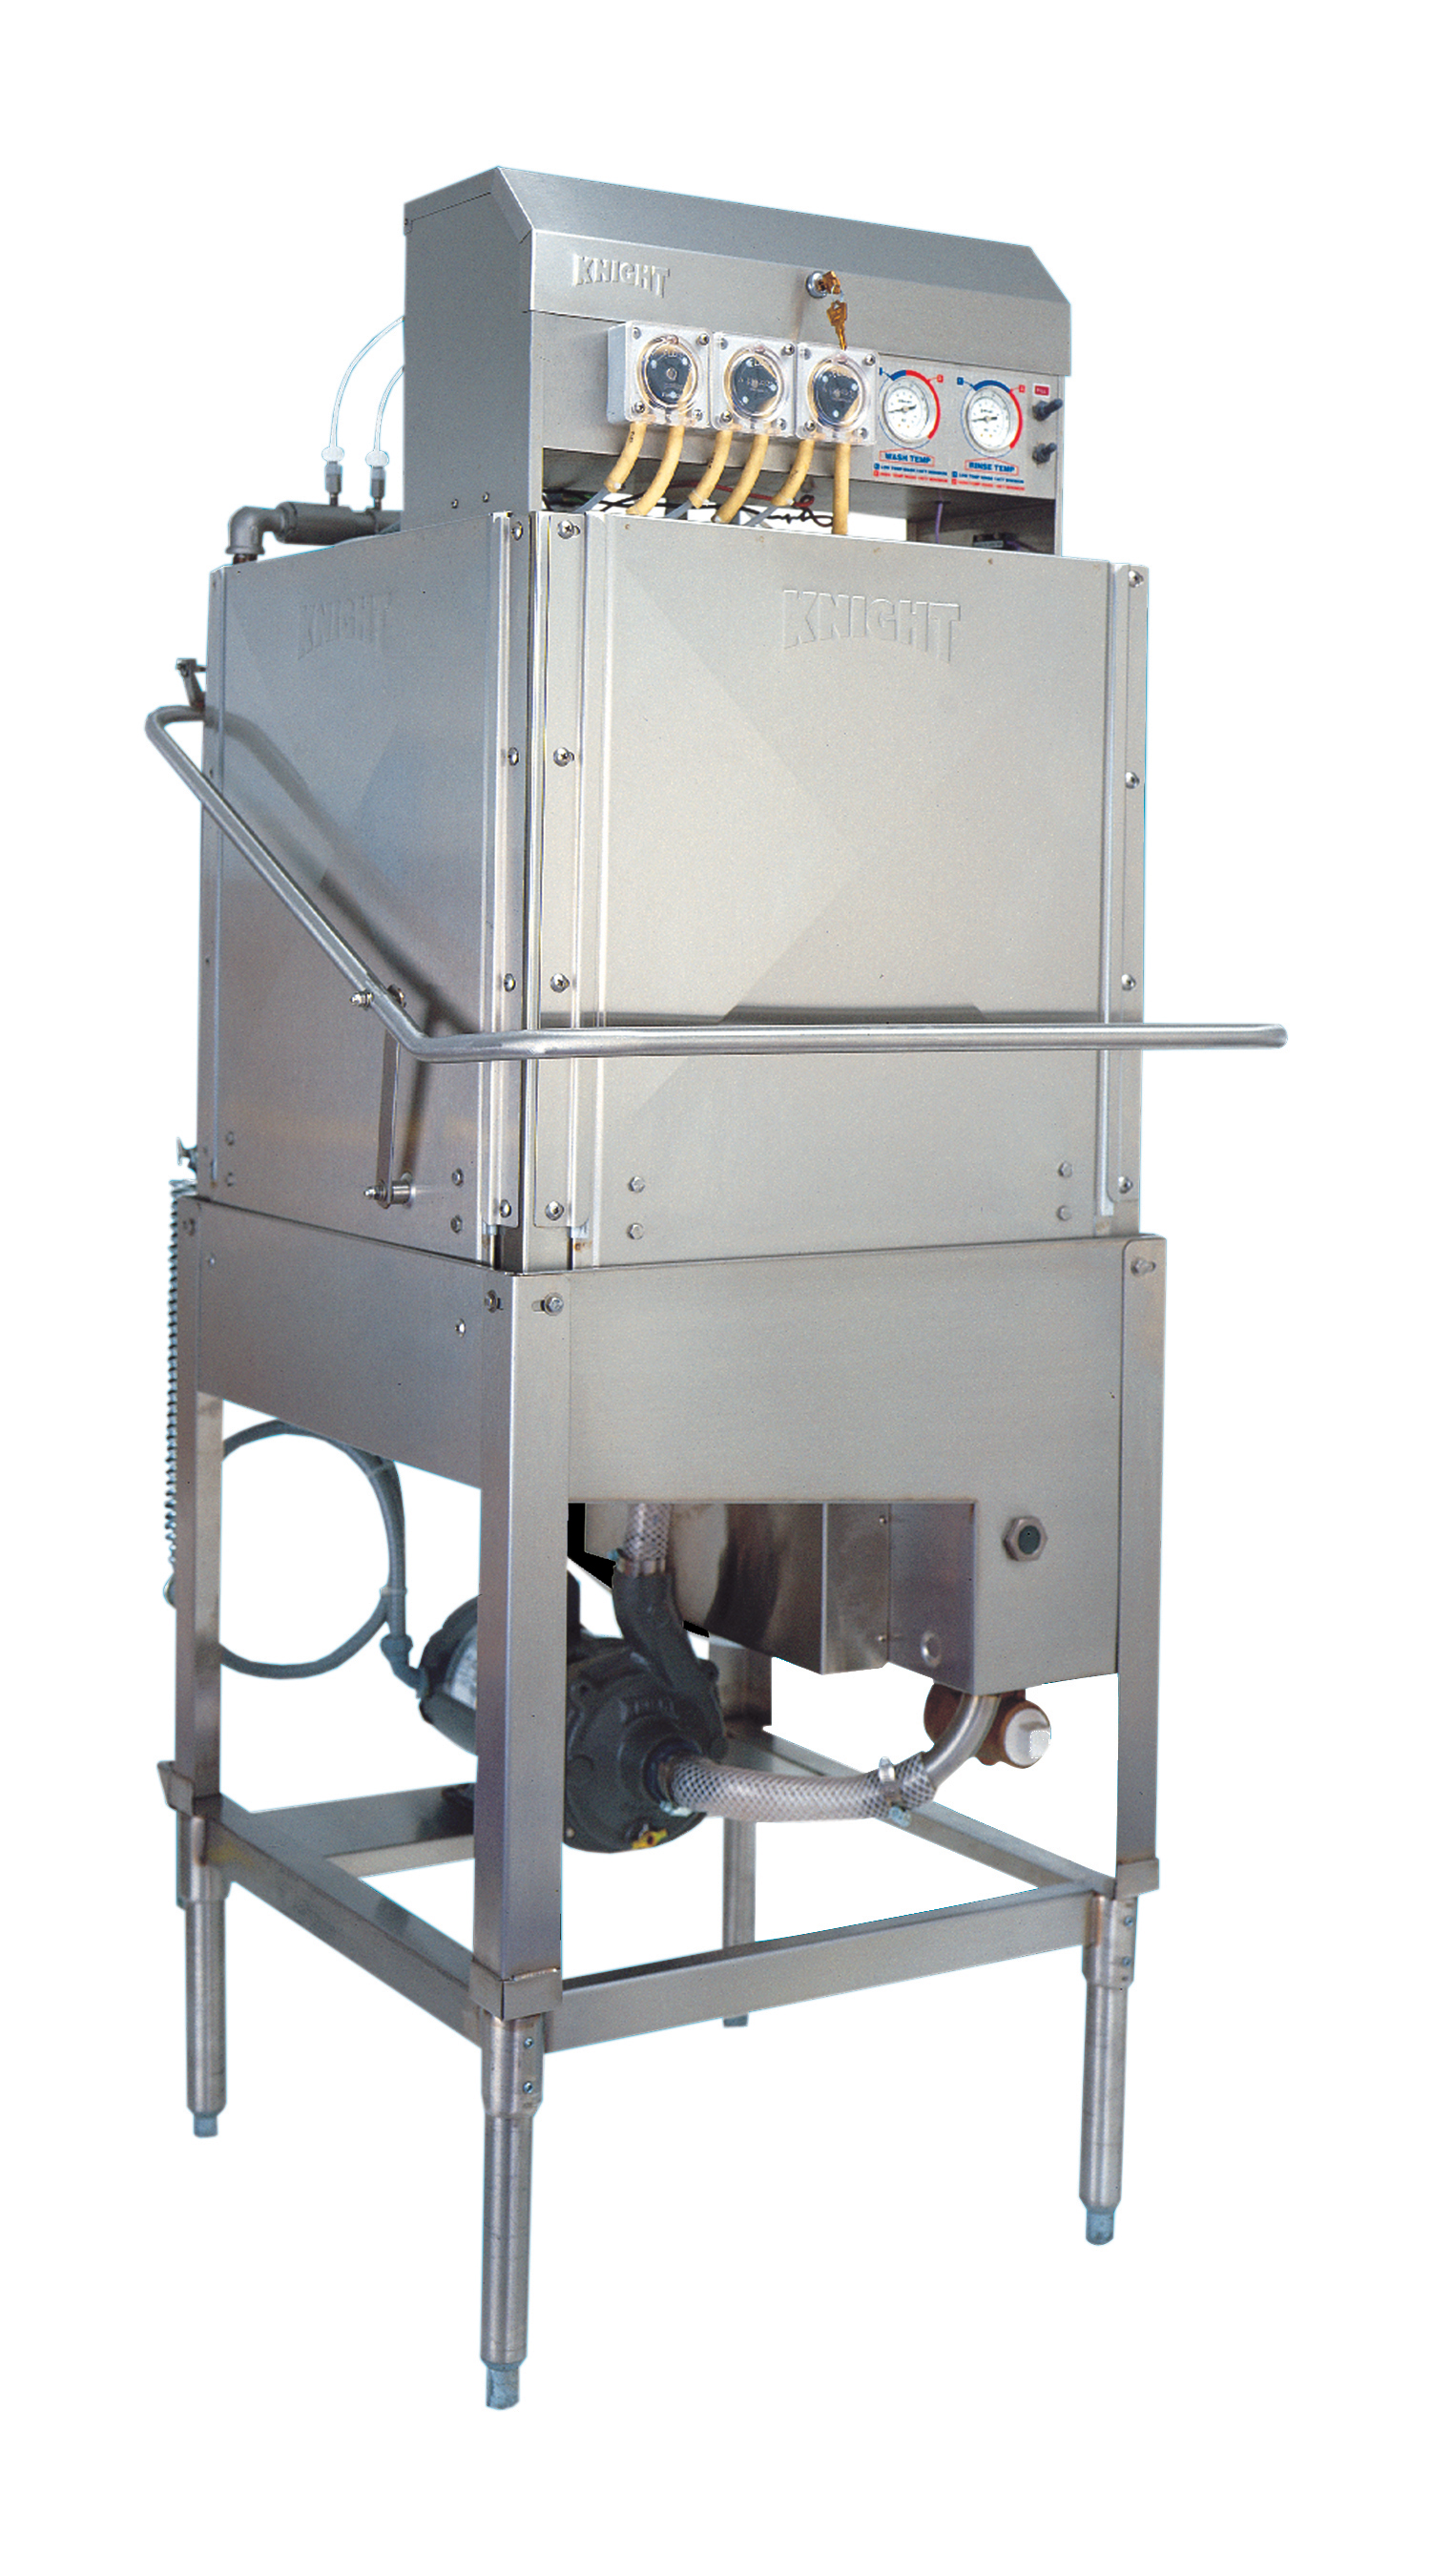 used industrial dishwashing machines